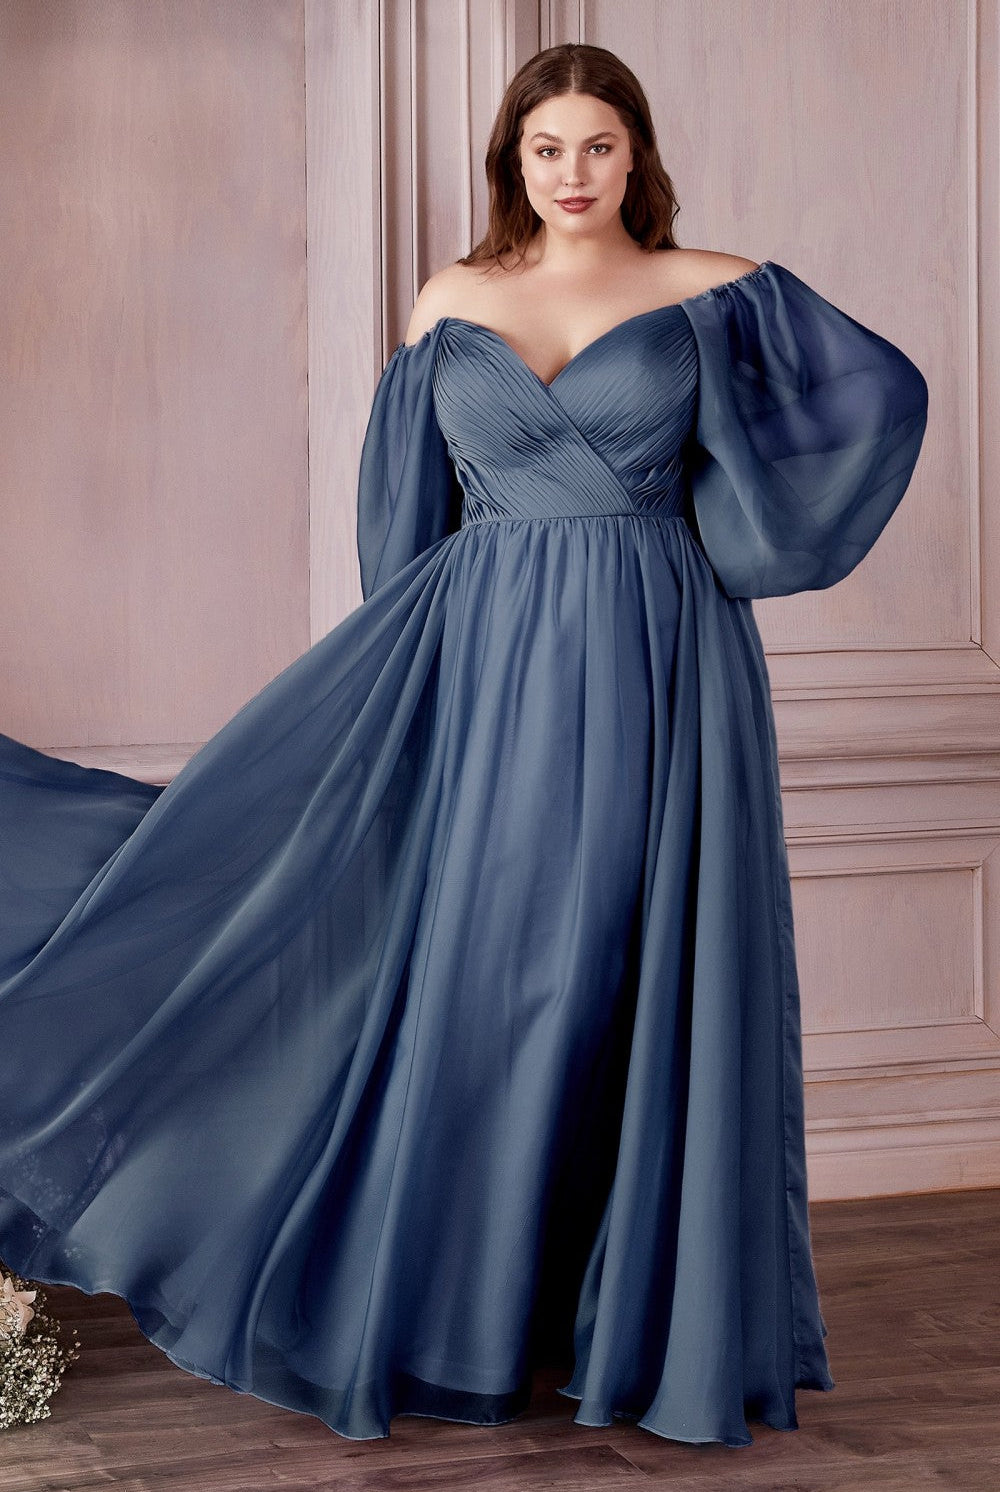 Classic Evening & Prom Dresses Long Sleeves Bodice A-line Chiffon Gown Plus Size Luxury Royal Style CDCD243C Sale-Prom Dress-smcfashion.com